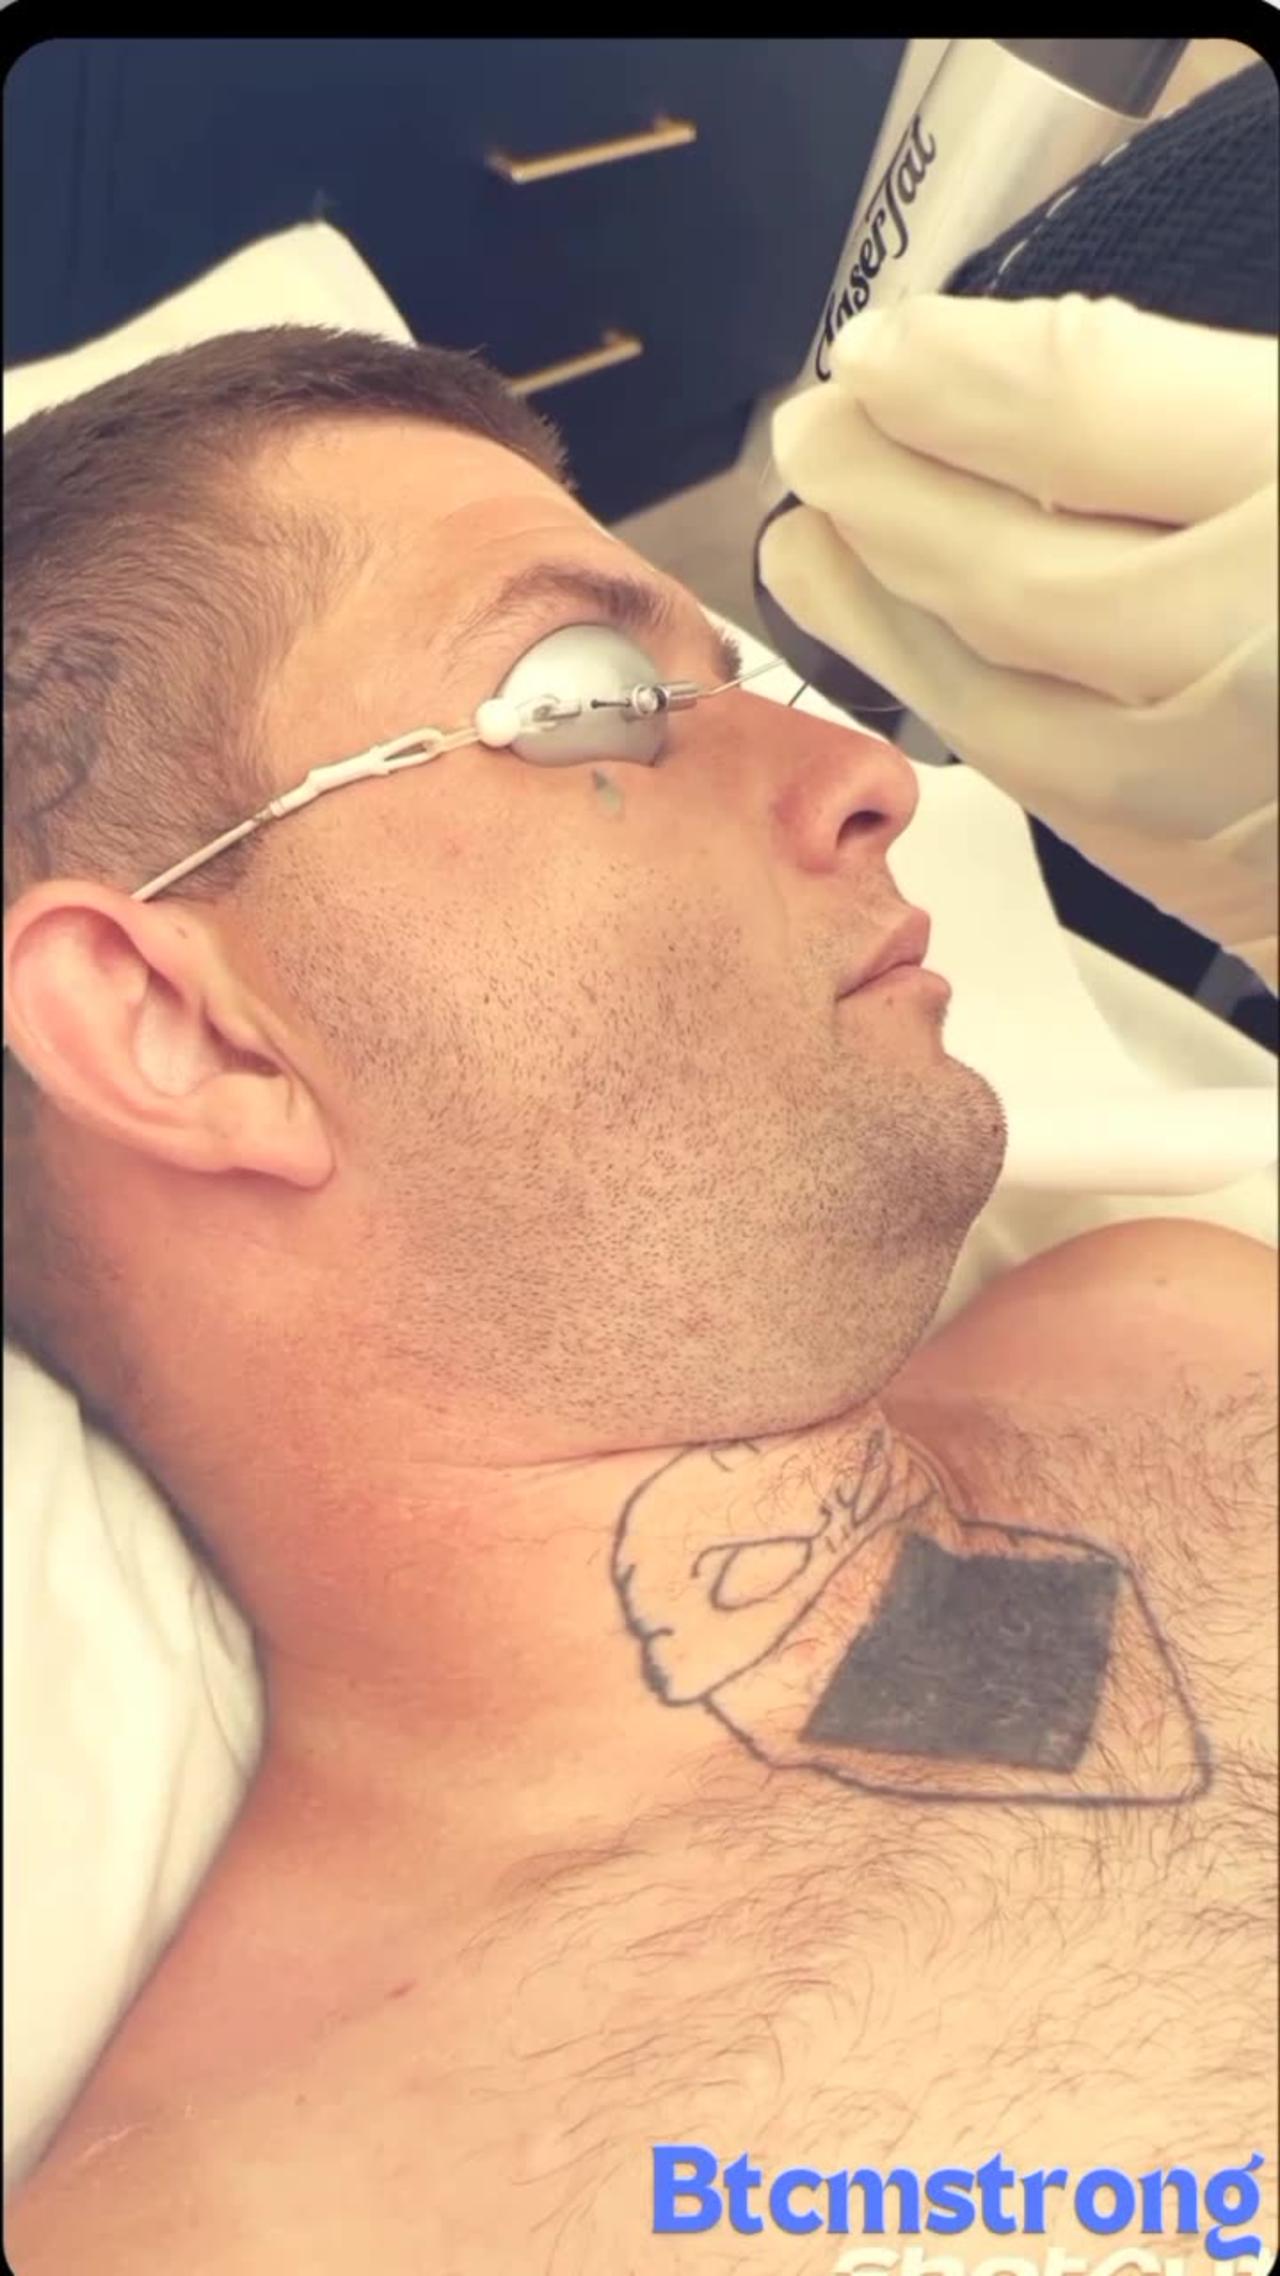 Initial Treatment Progress: Facial Tattoo Removal for Recent Fresh Start Program Participant